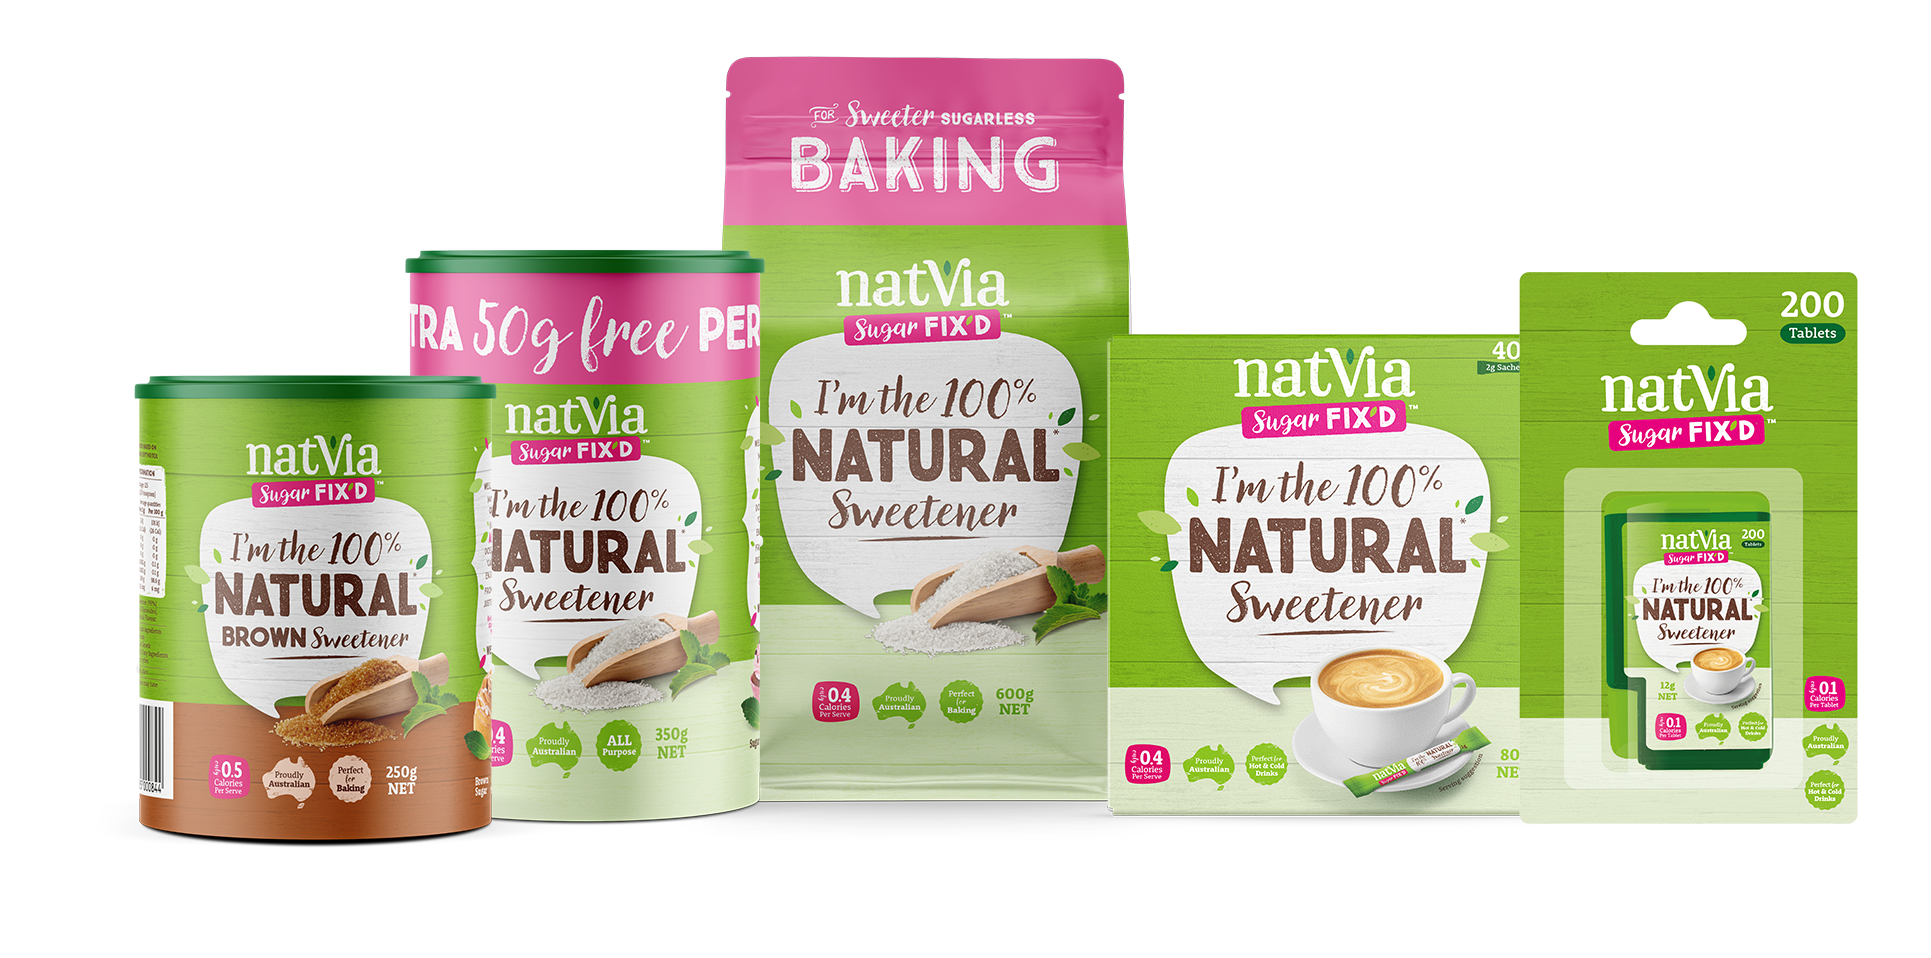 About Natvia natural sweetener